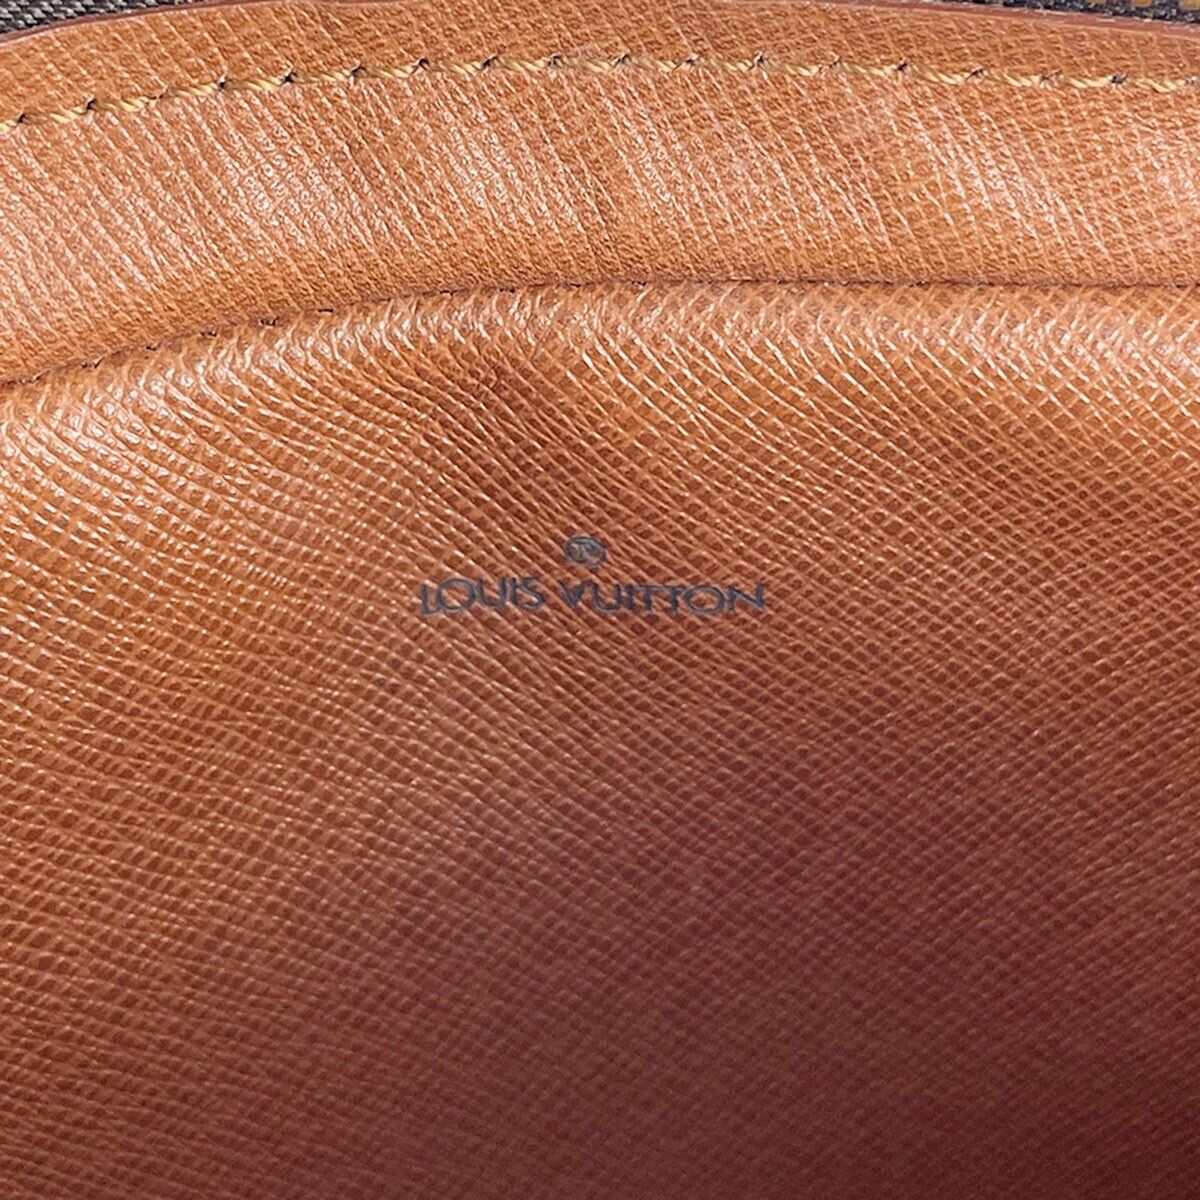 Saint-germain leather handbag Louis Vuitton Beige in Leather - 19101377